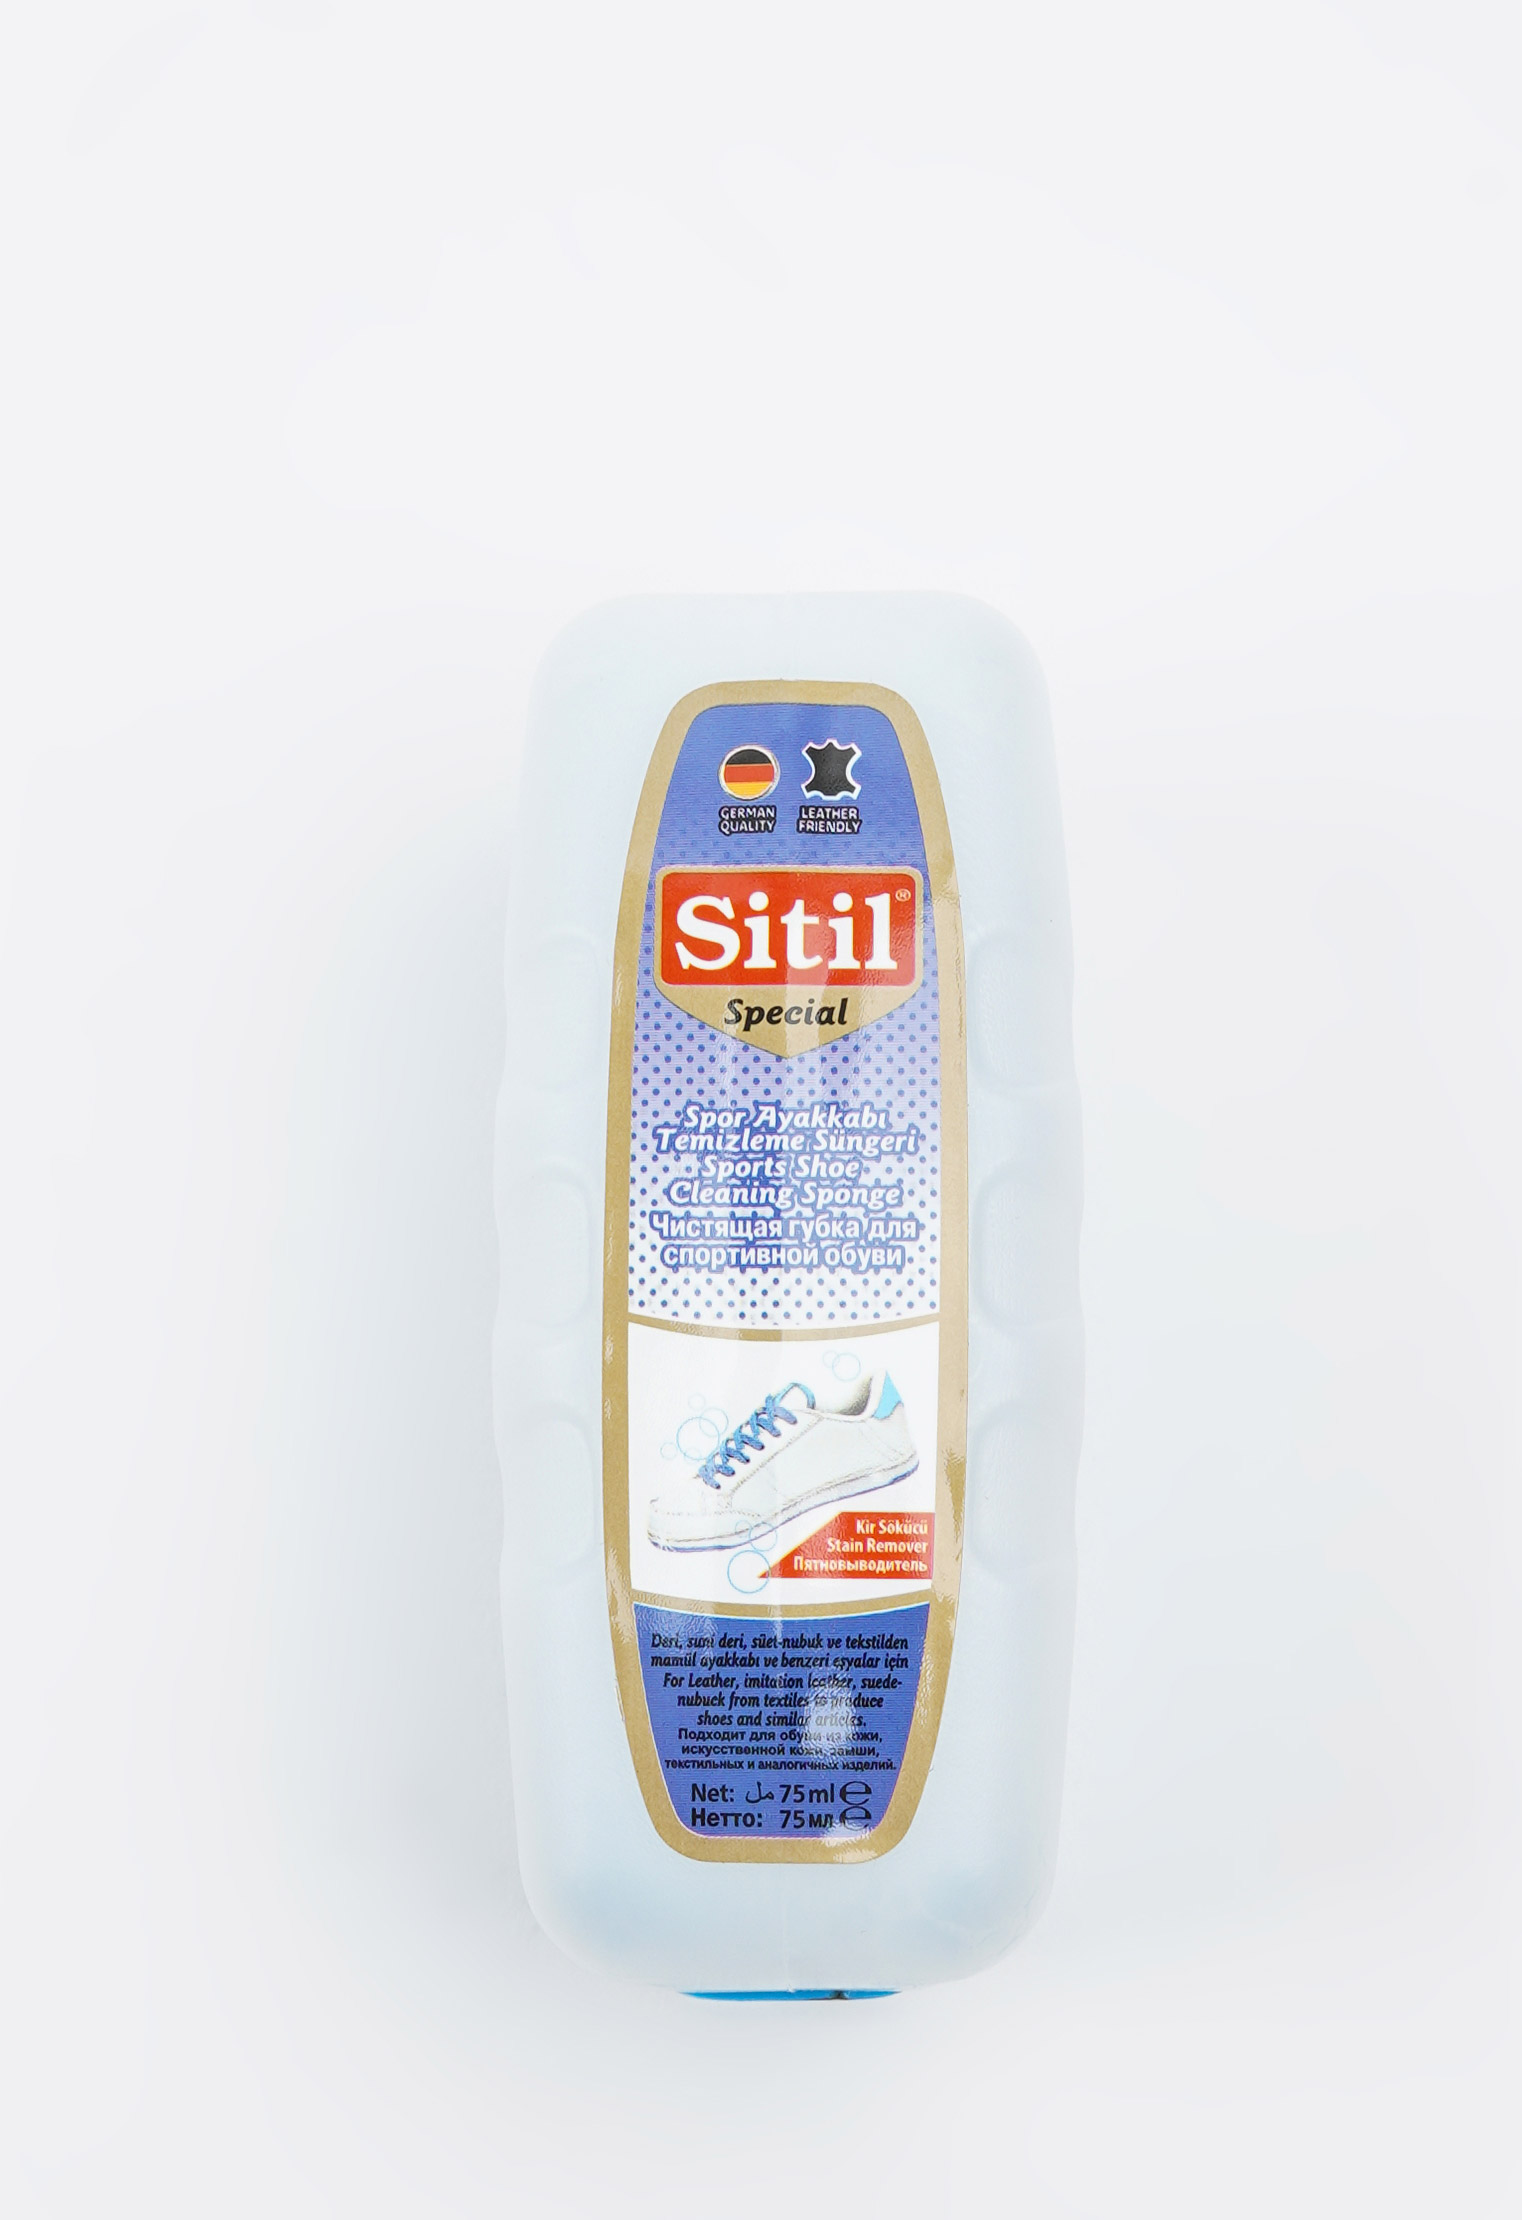 Уход за обувью 20-8862 Sport Shoe Cleaning Sponge 75 ml, чистящая губка для спортивной обуви, Sitil